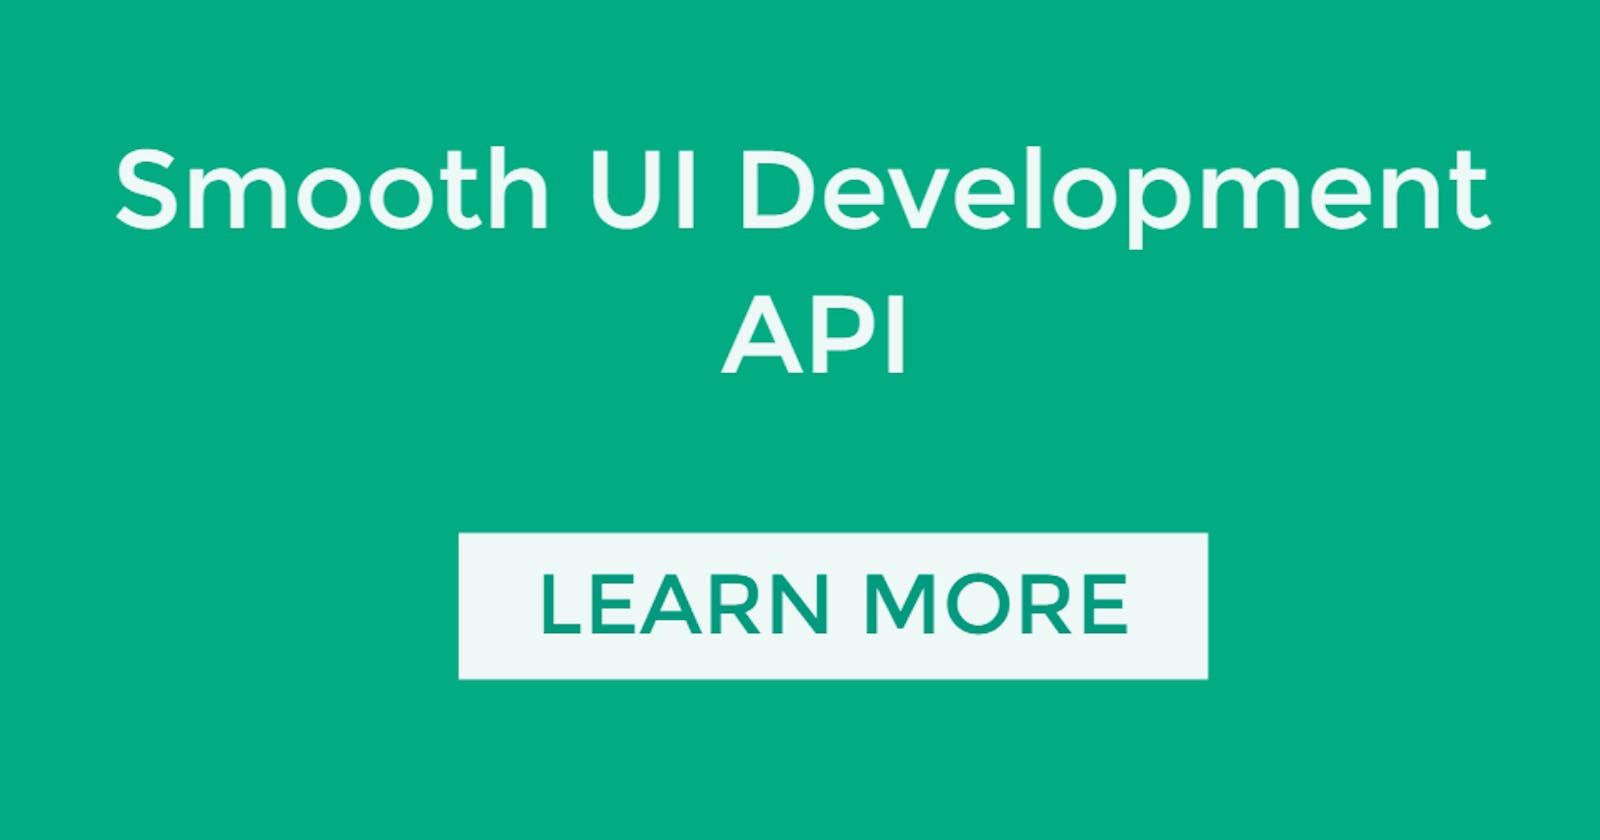 Top 3 Helper APIs for smooth web development